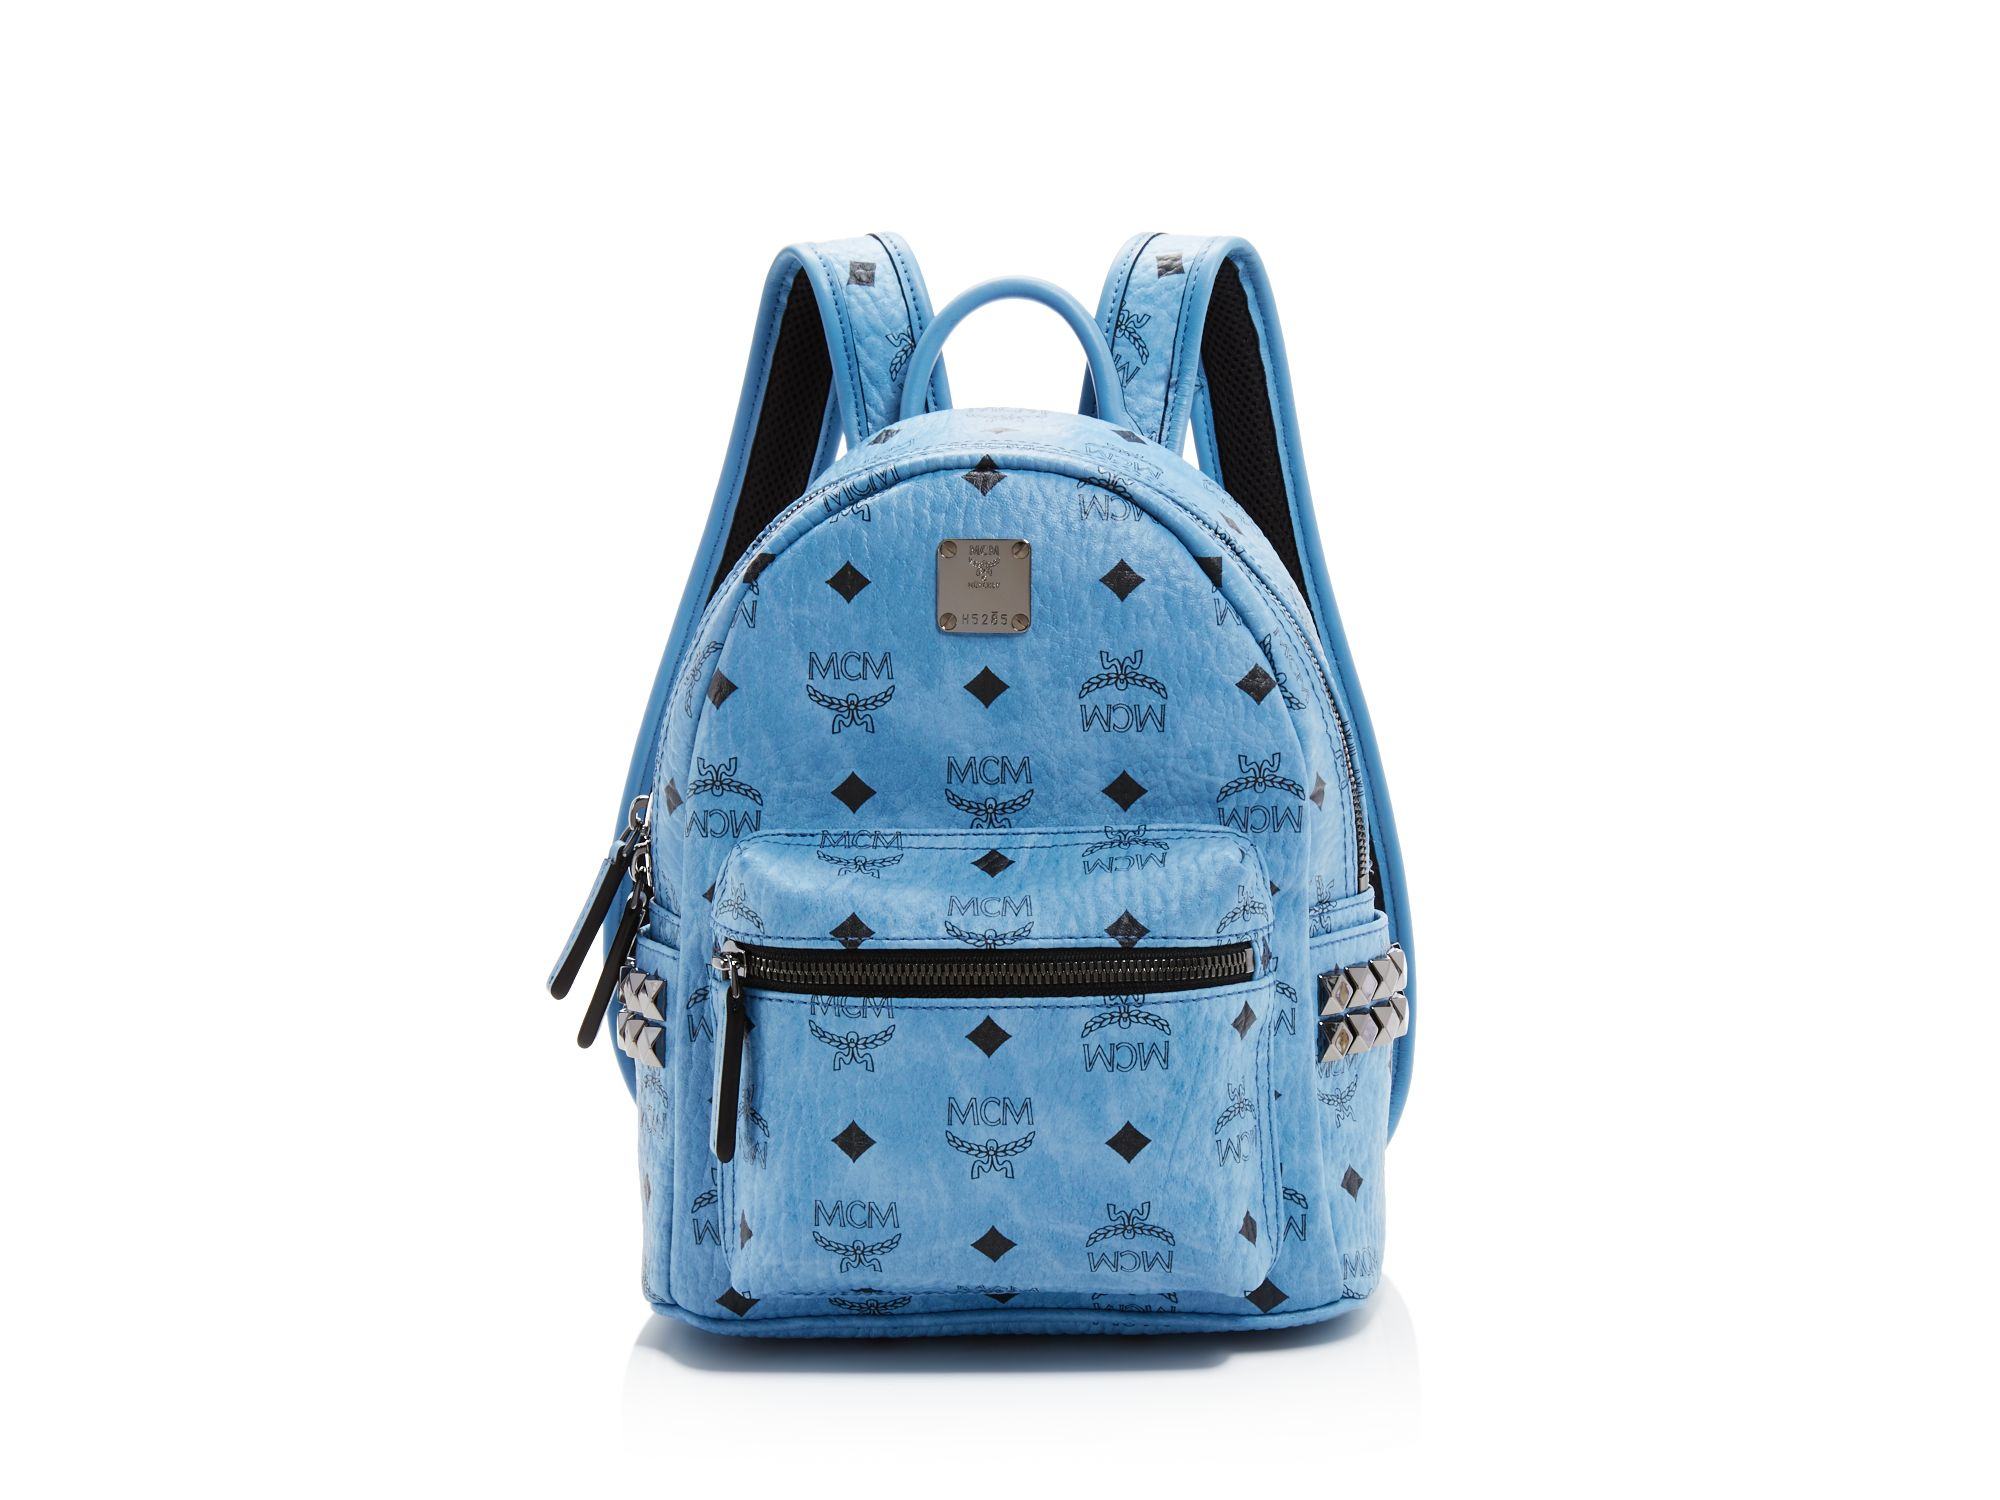 Lyst - Mcm Stark Mini Backpack in Blue